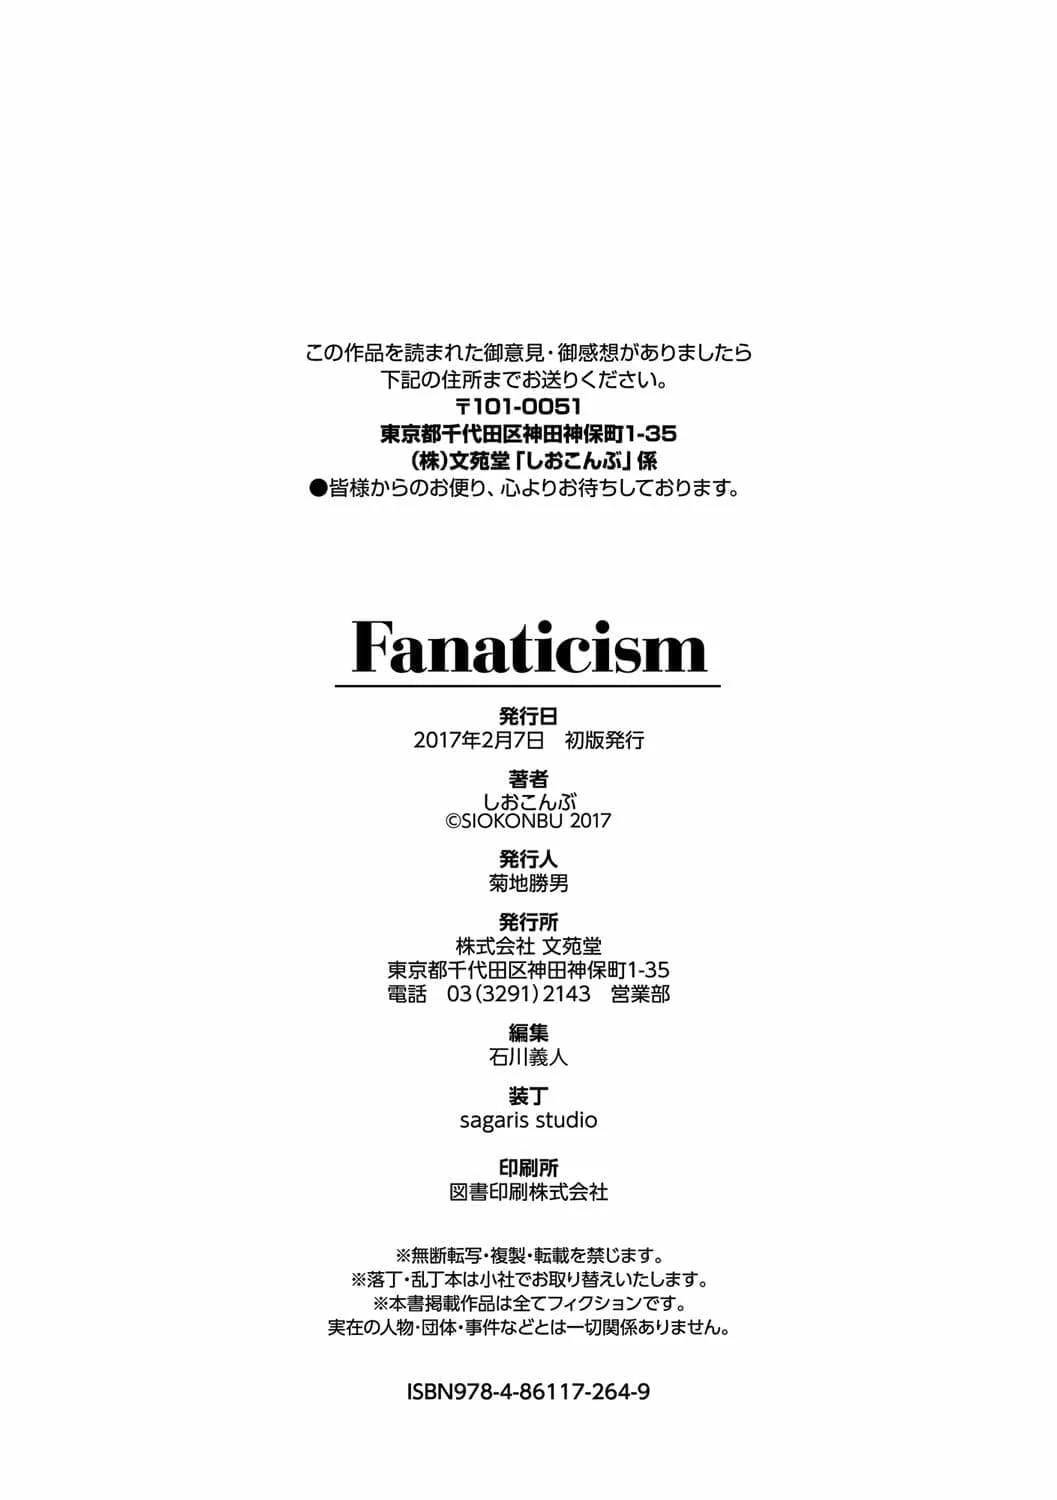 Fanaticism - 233